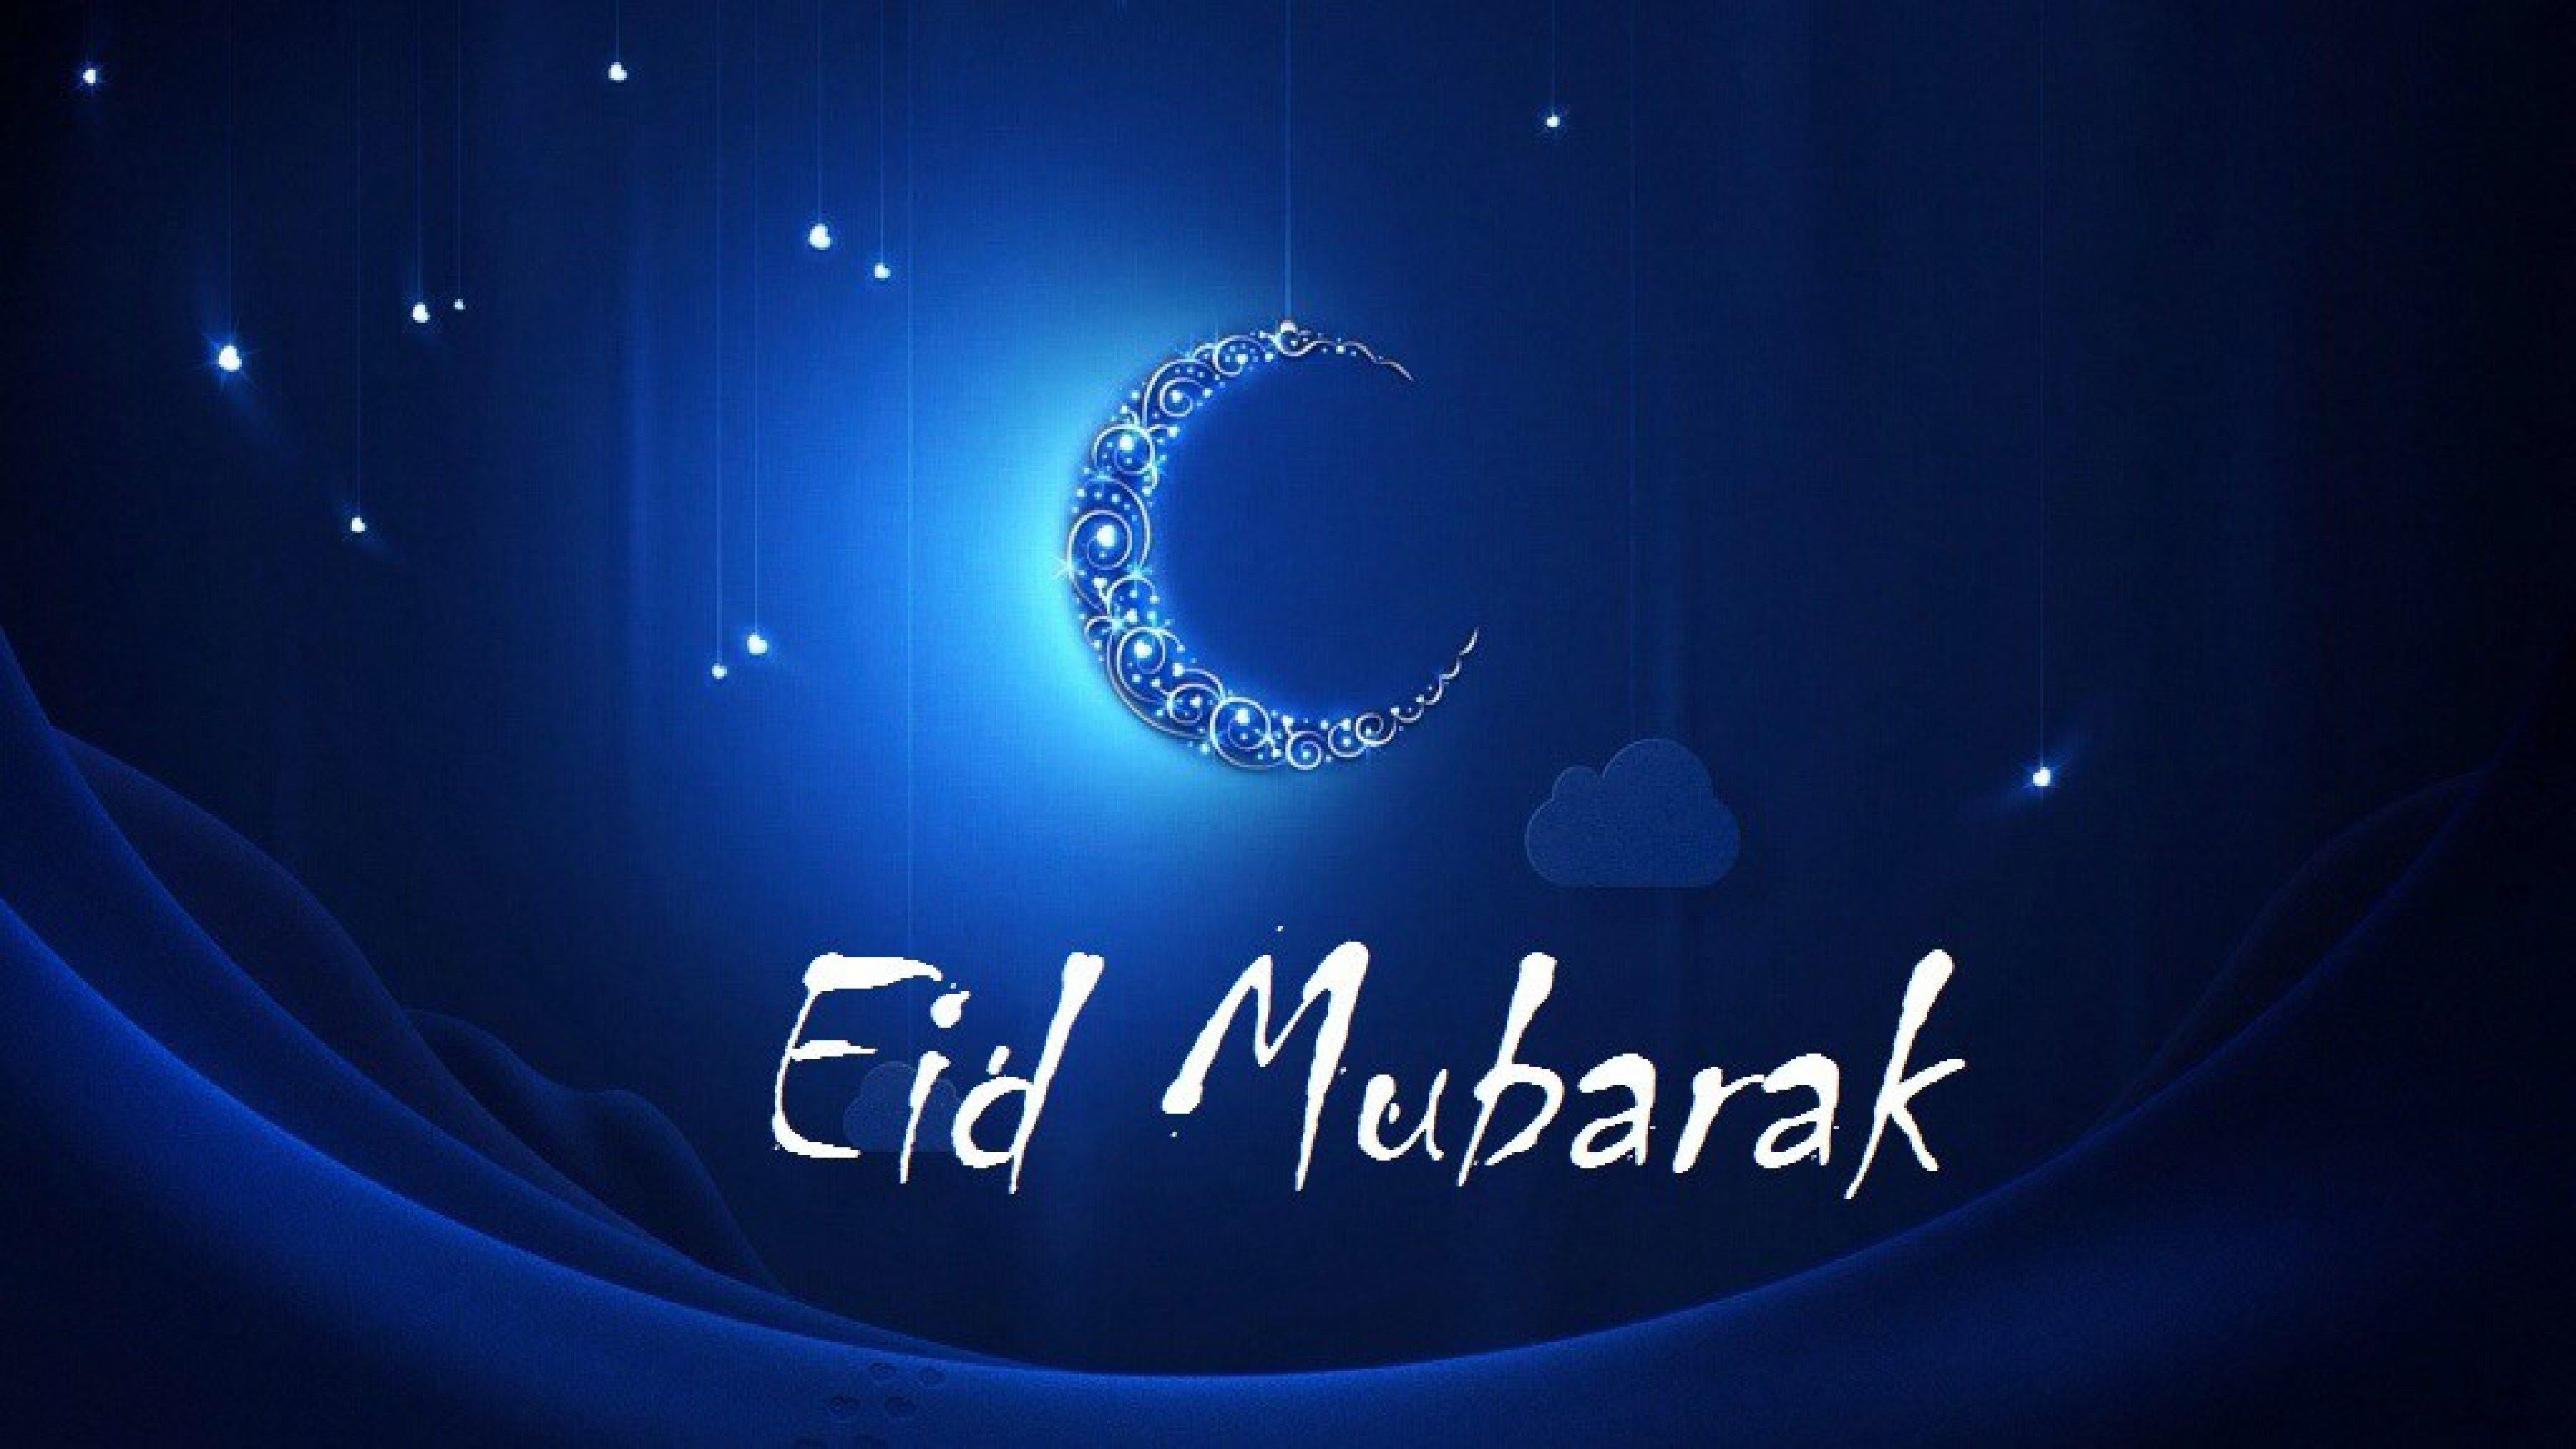 Happy Eid Mubarak Wishes Ultra HD 4K Image. Happy eid mubarak